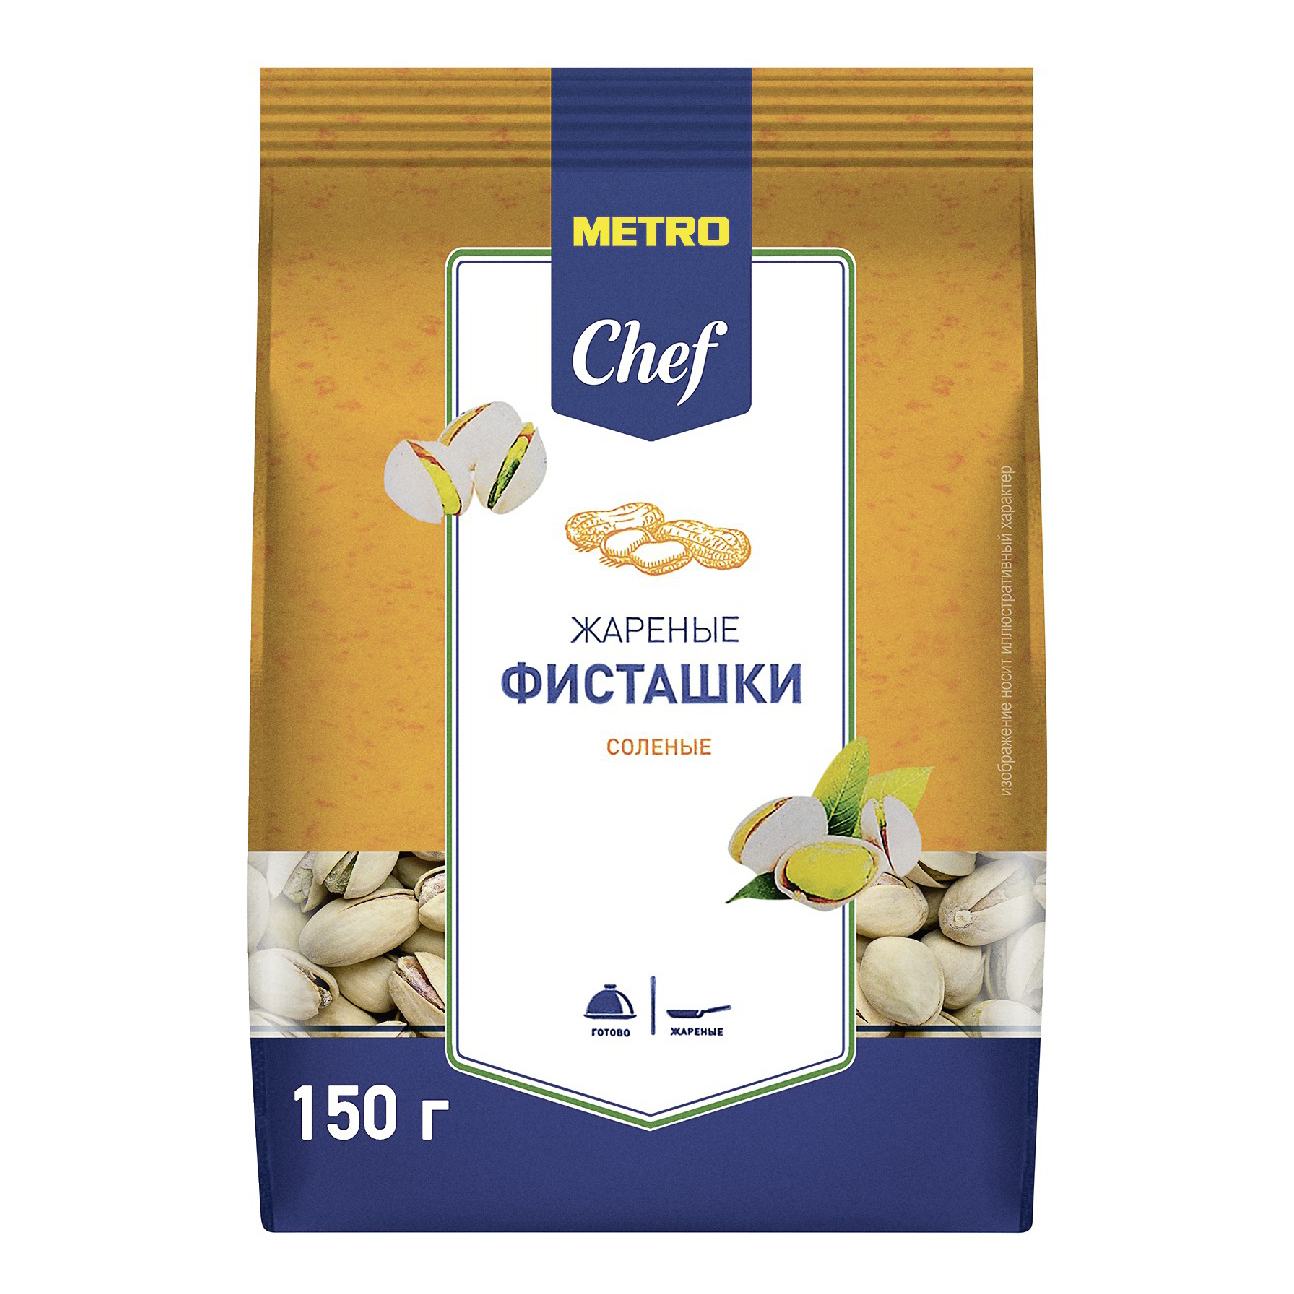 Фисташки Metro Chef жареные соленые 150 г